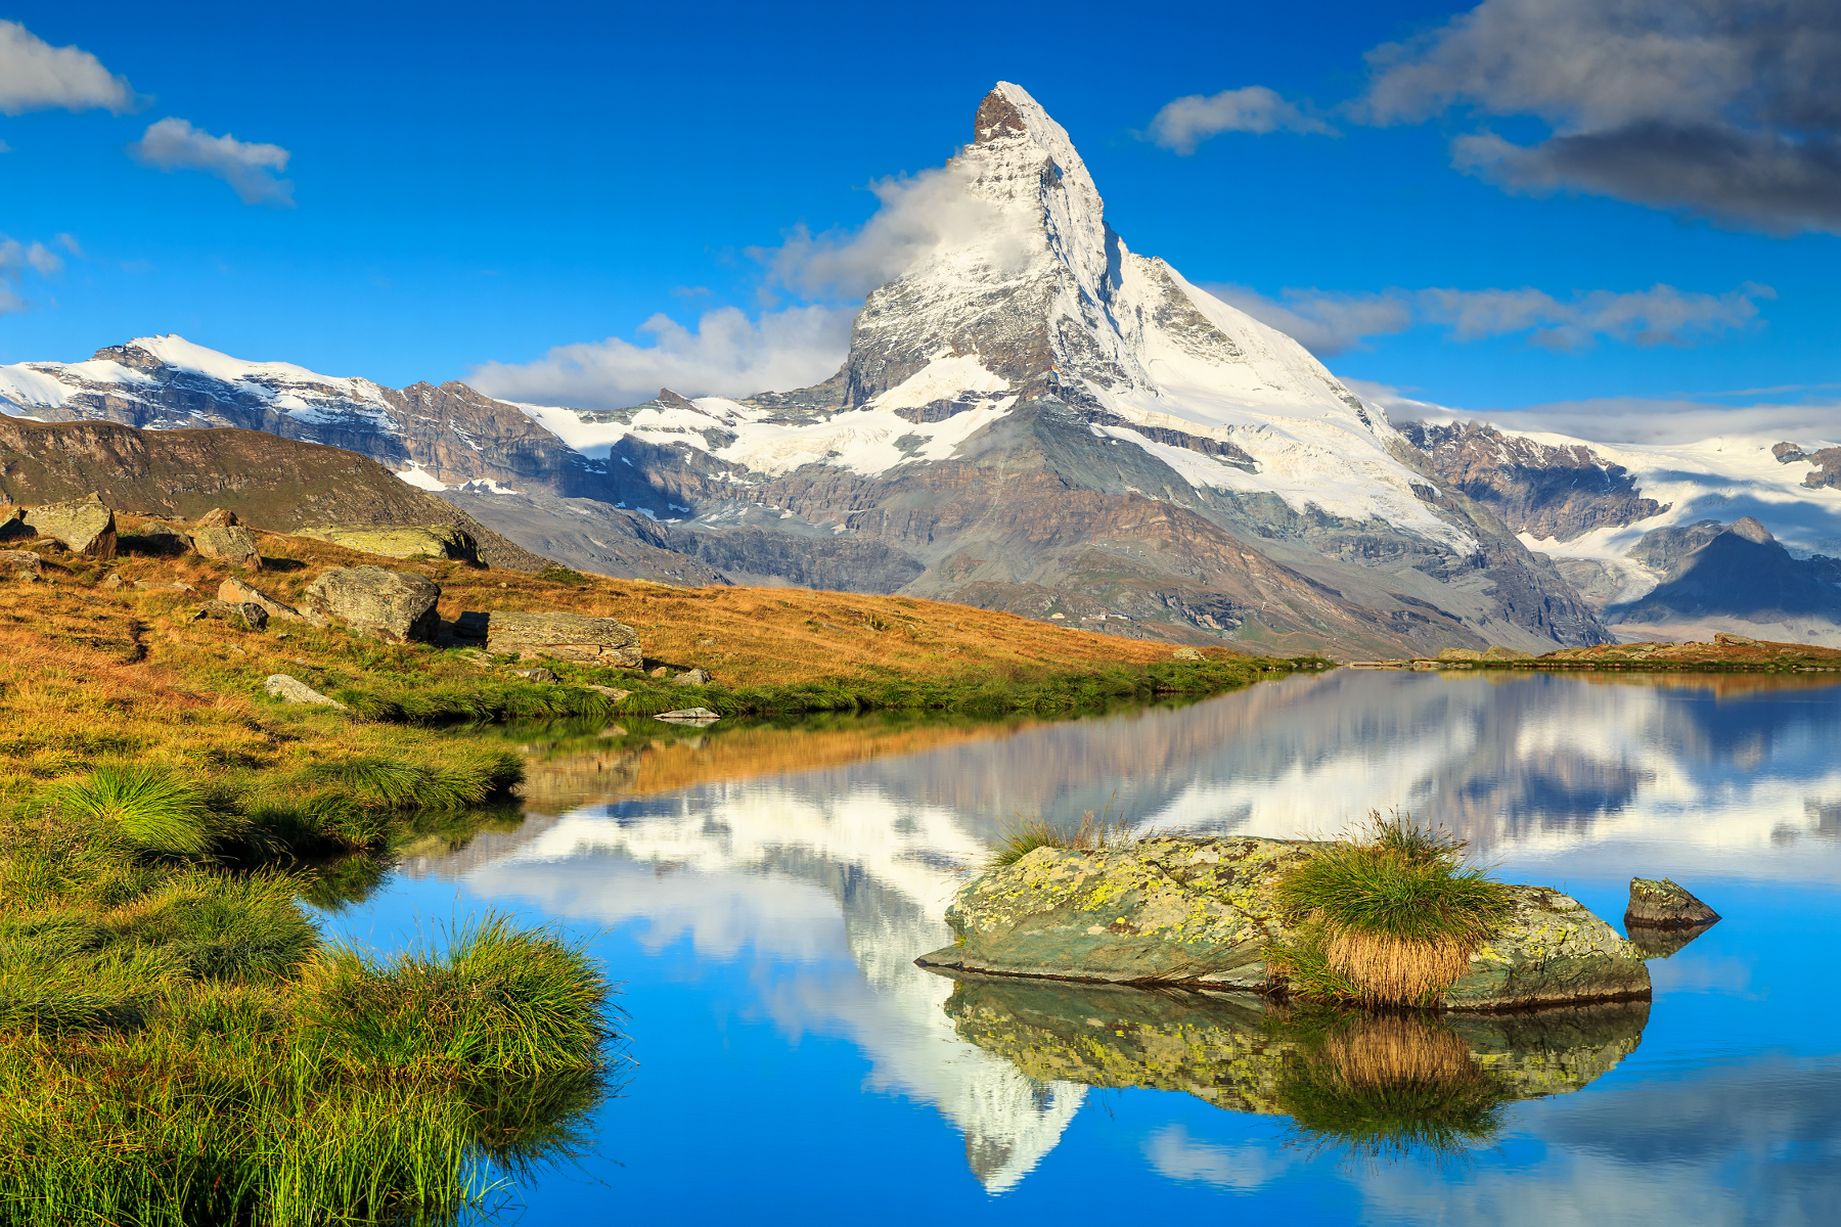 Stunning panorama with Matterhorn and beautiful alpine lake